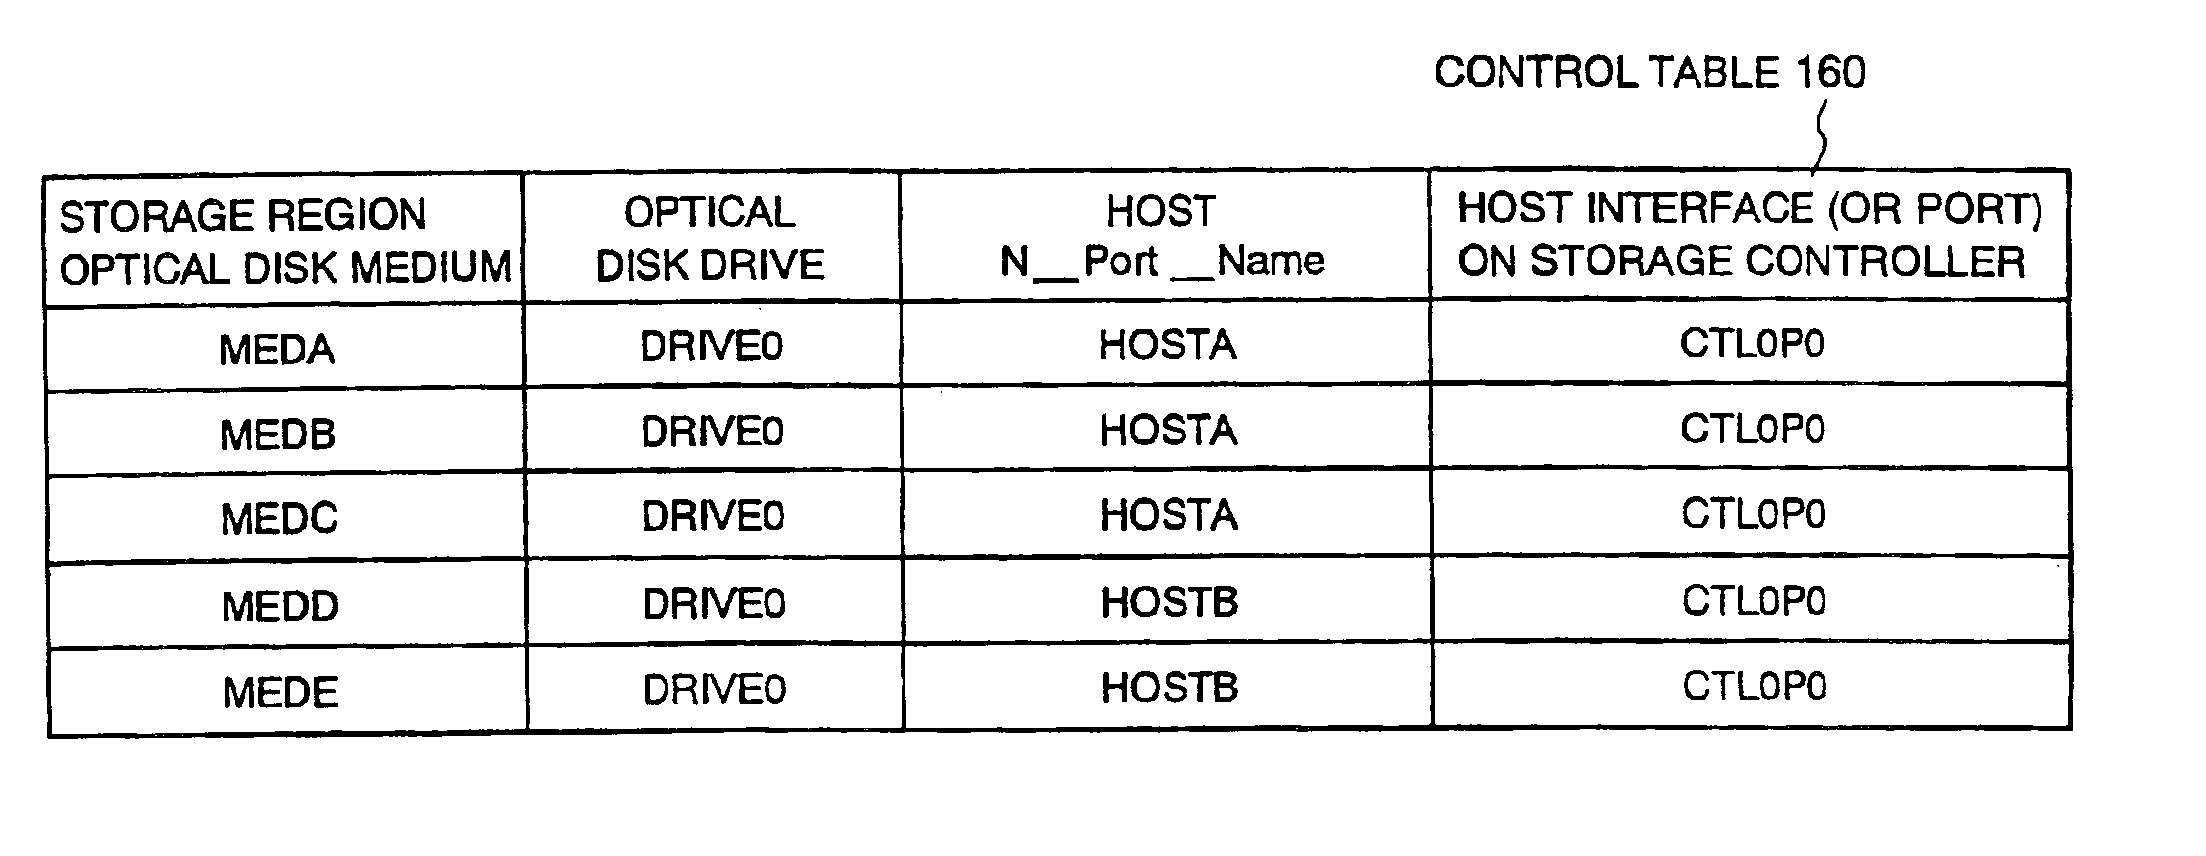 Fiber channel connection storage controller